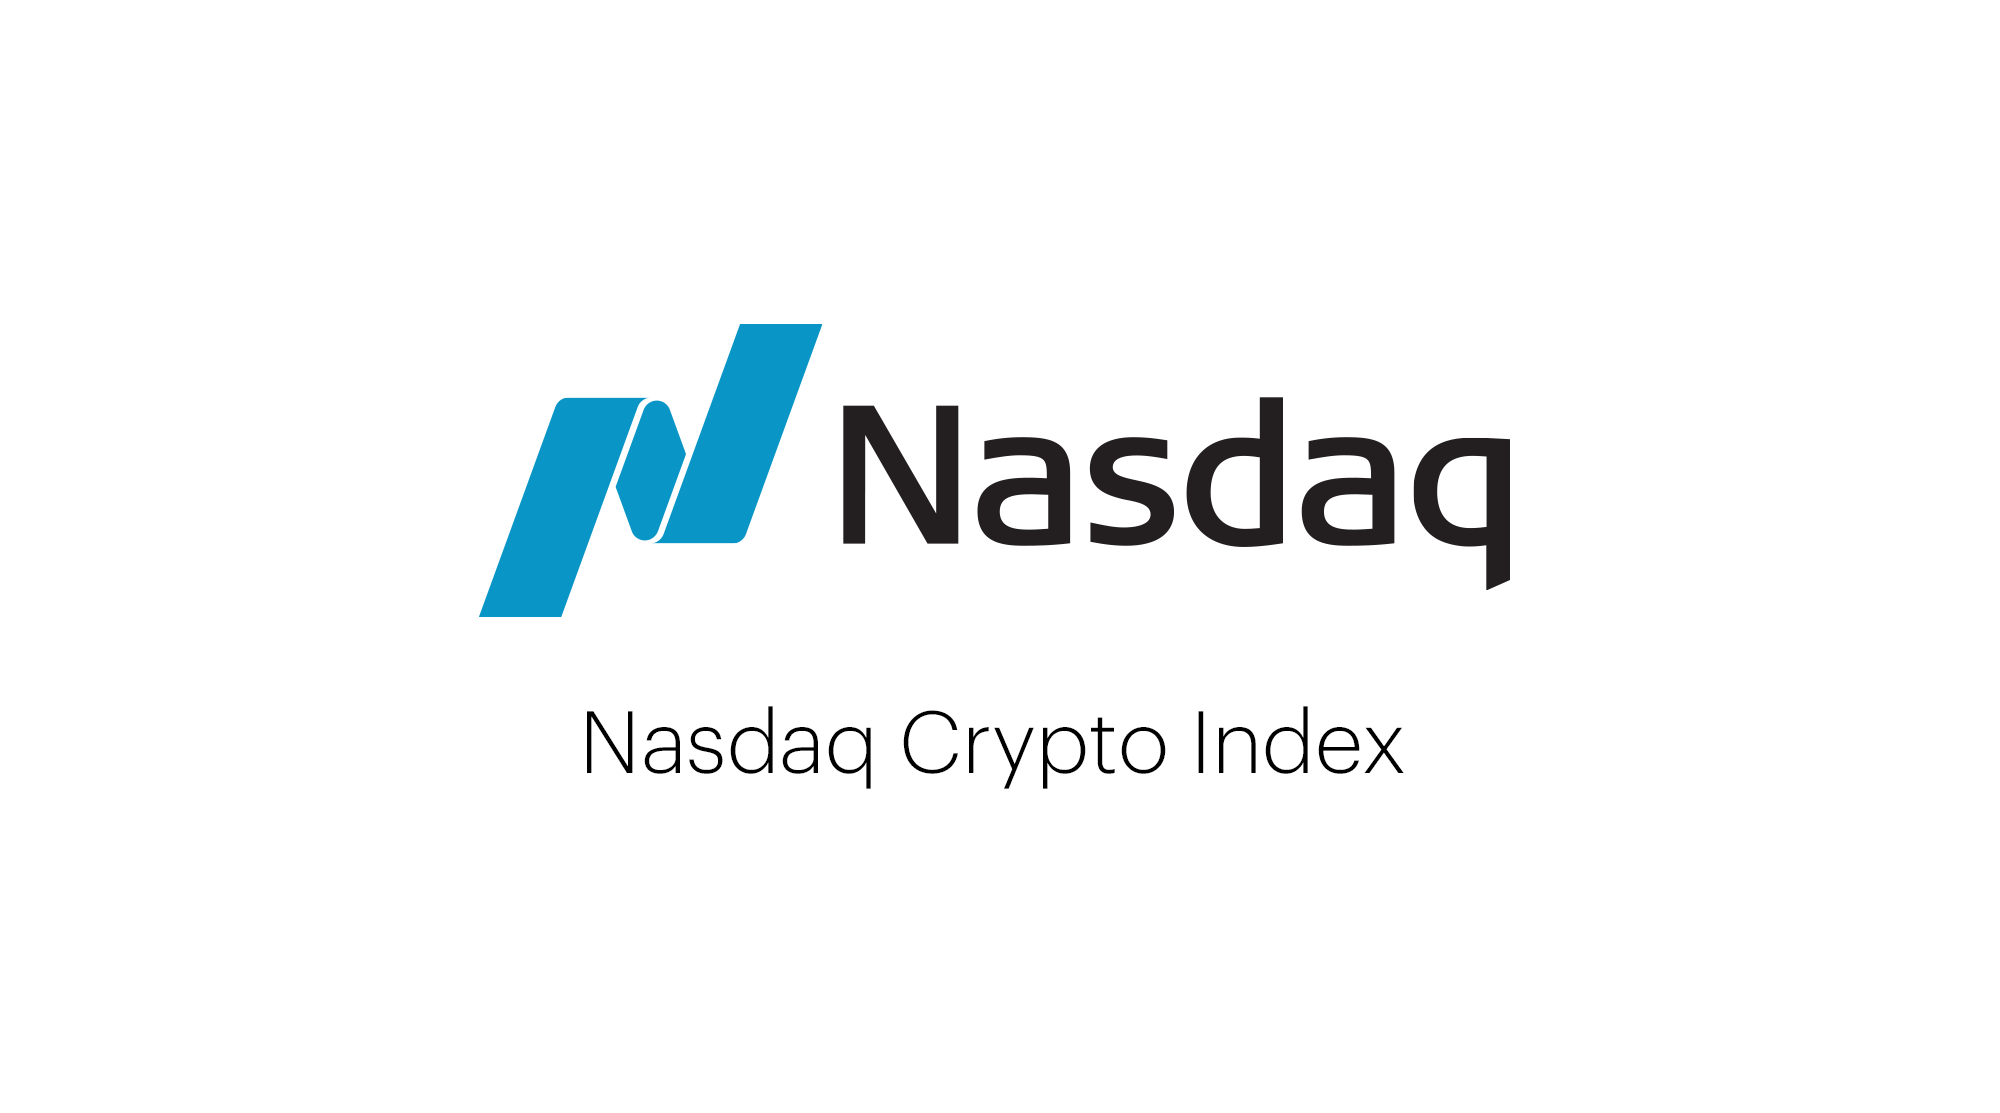 Nasdaq Crypto Index (^NCI) Historical Data - Yahoo Finance